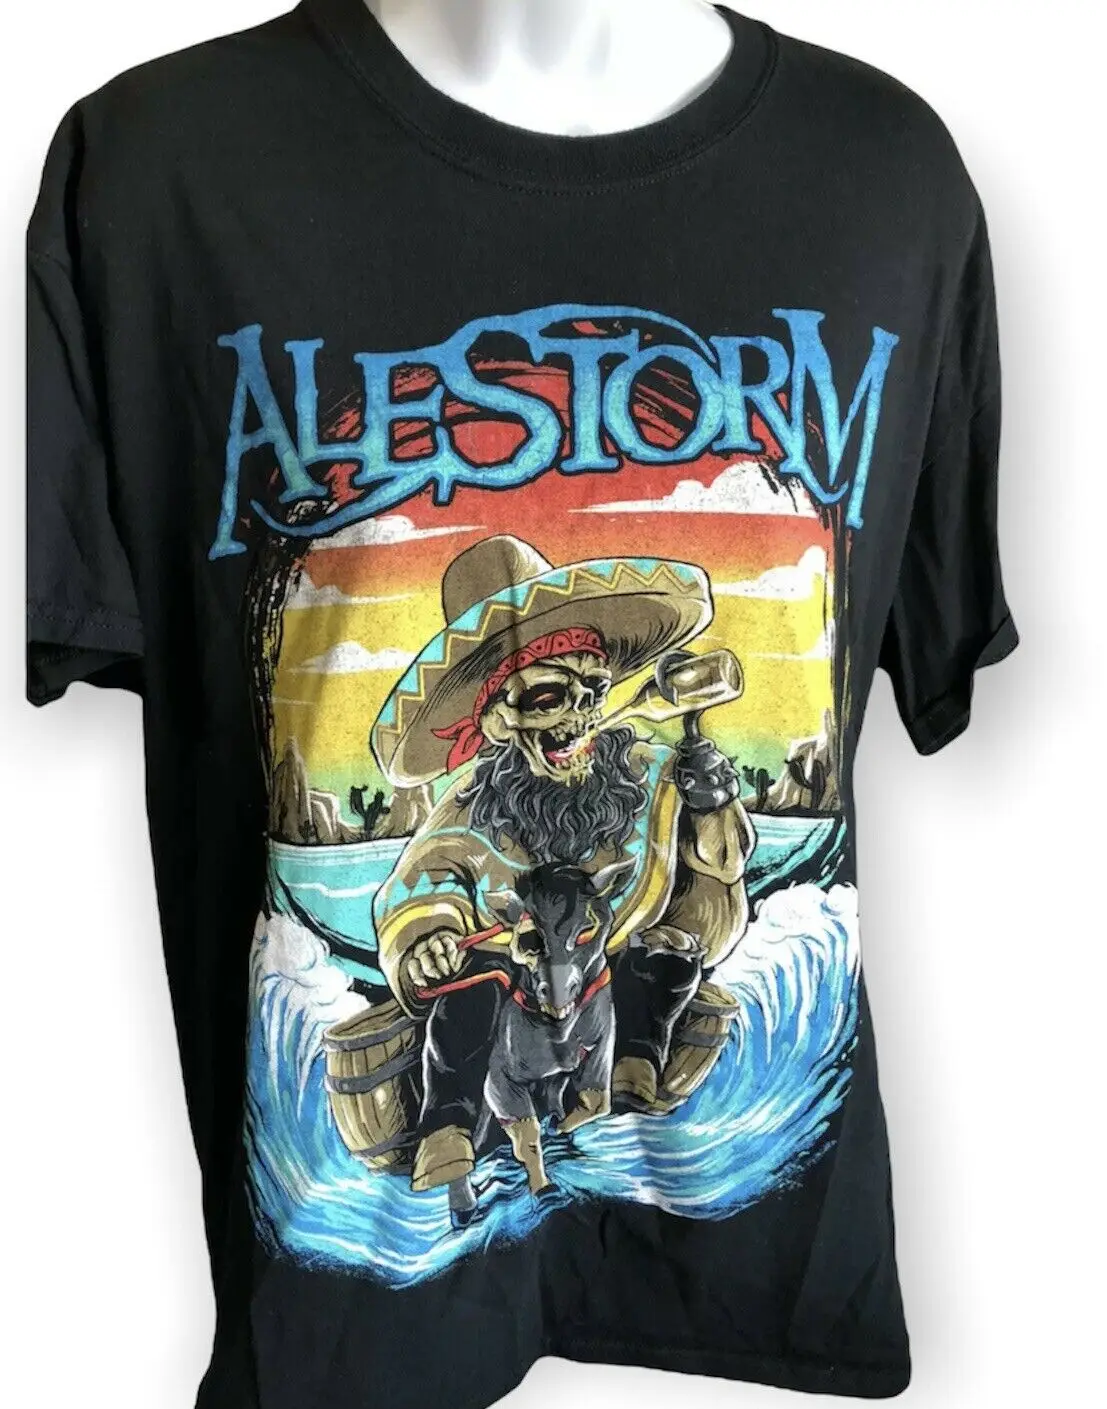 Alestorm T-shirt Metall Rock Band Mexiko Tequila Esel Zeigen Größe Große -  AliExpress